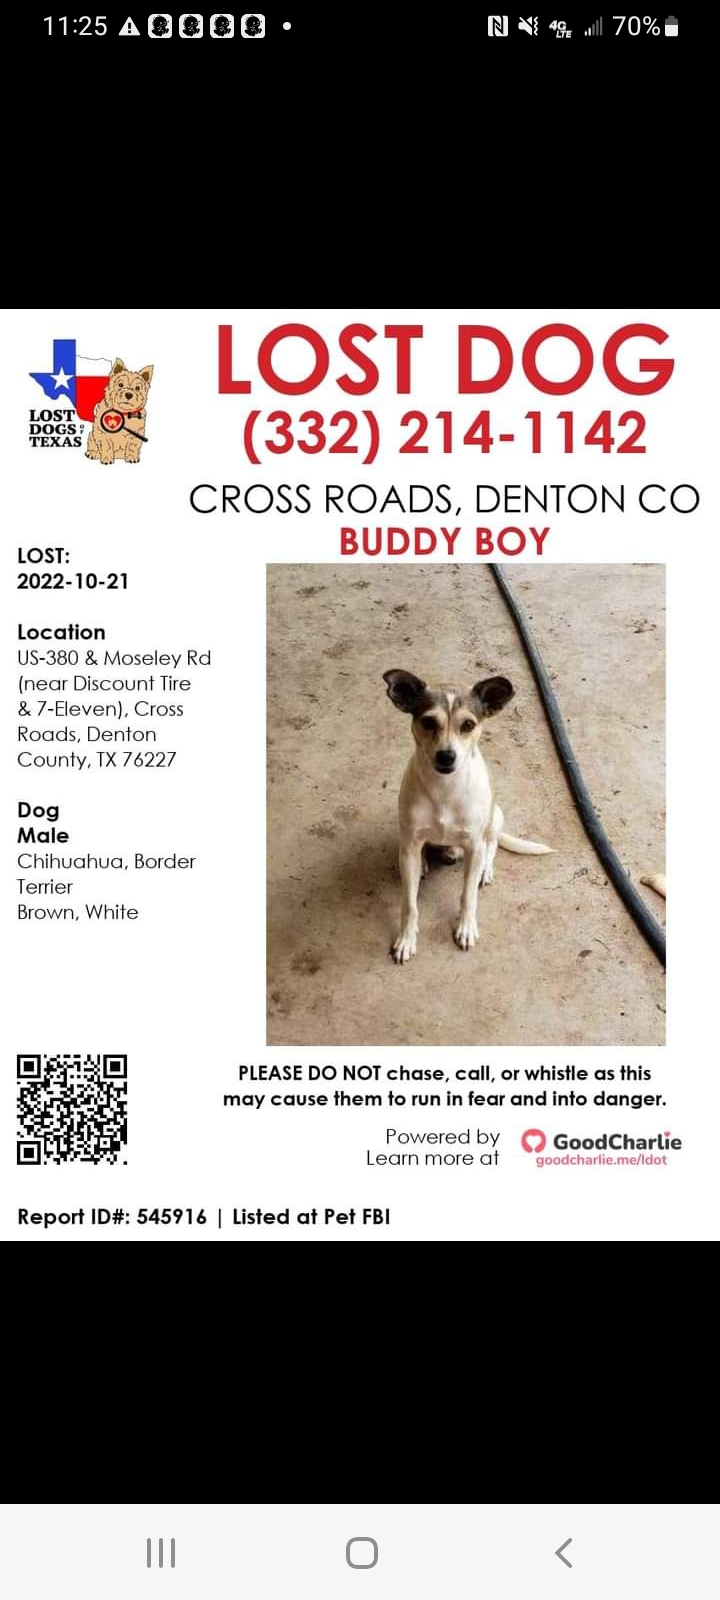 Image of Buddy boy, Lost Dog